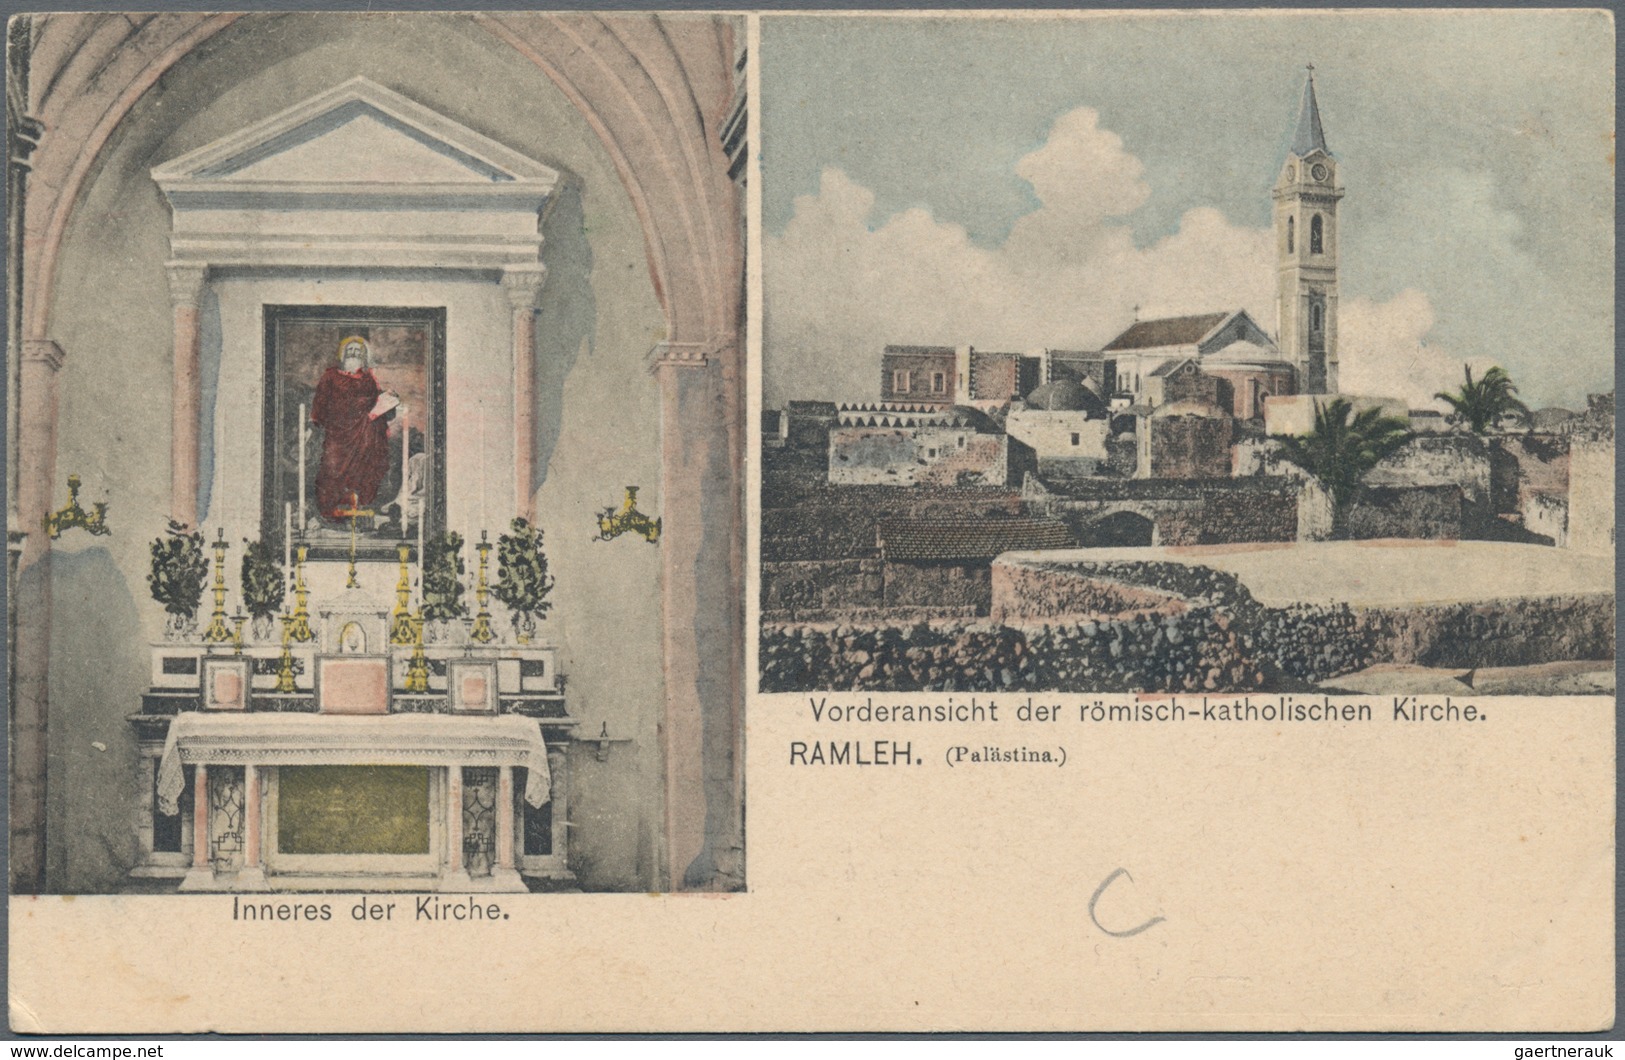 Palästina: 1905-40, 300+ Picture Postcards From Ottoman Period To British Mandate, Some Different, M - Palästina